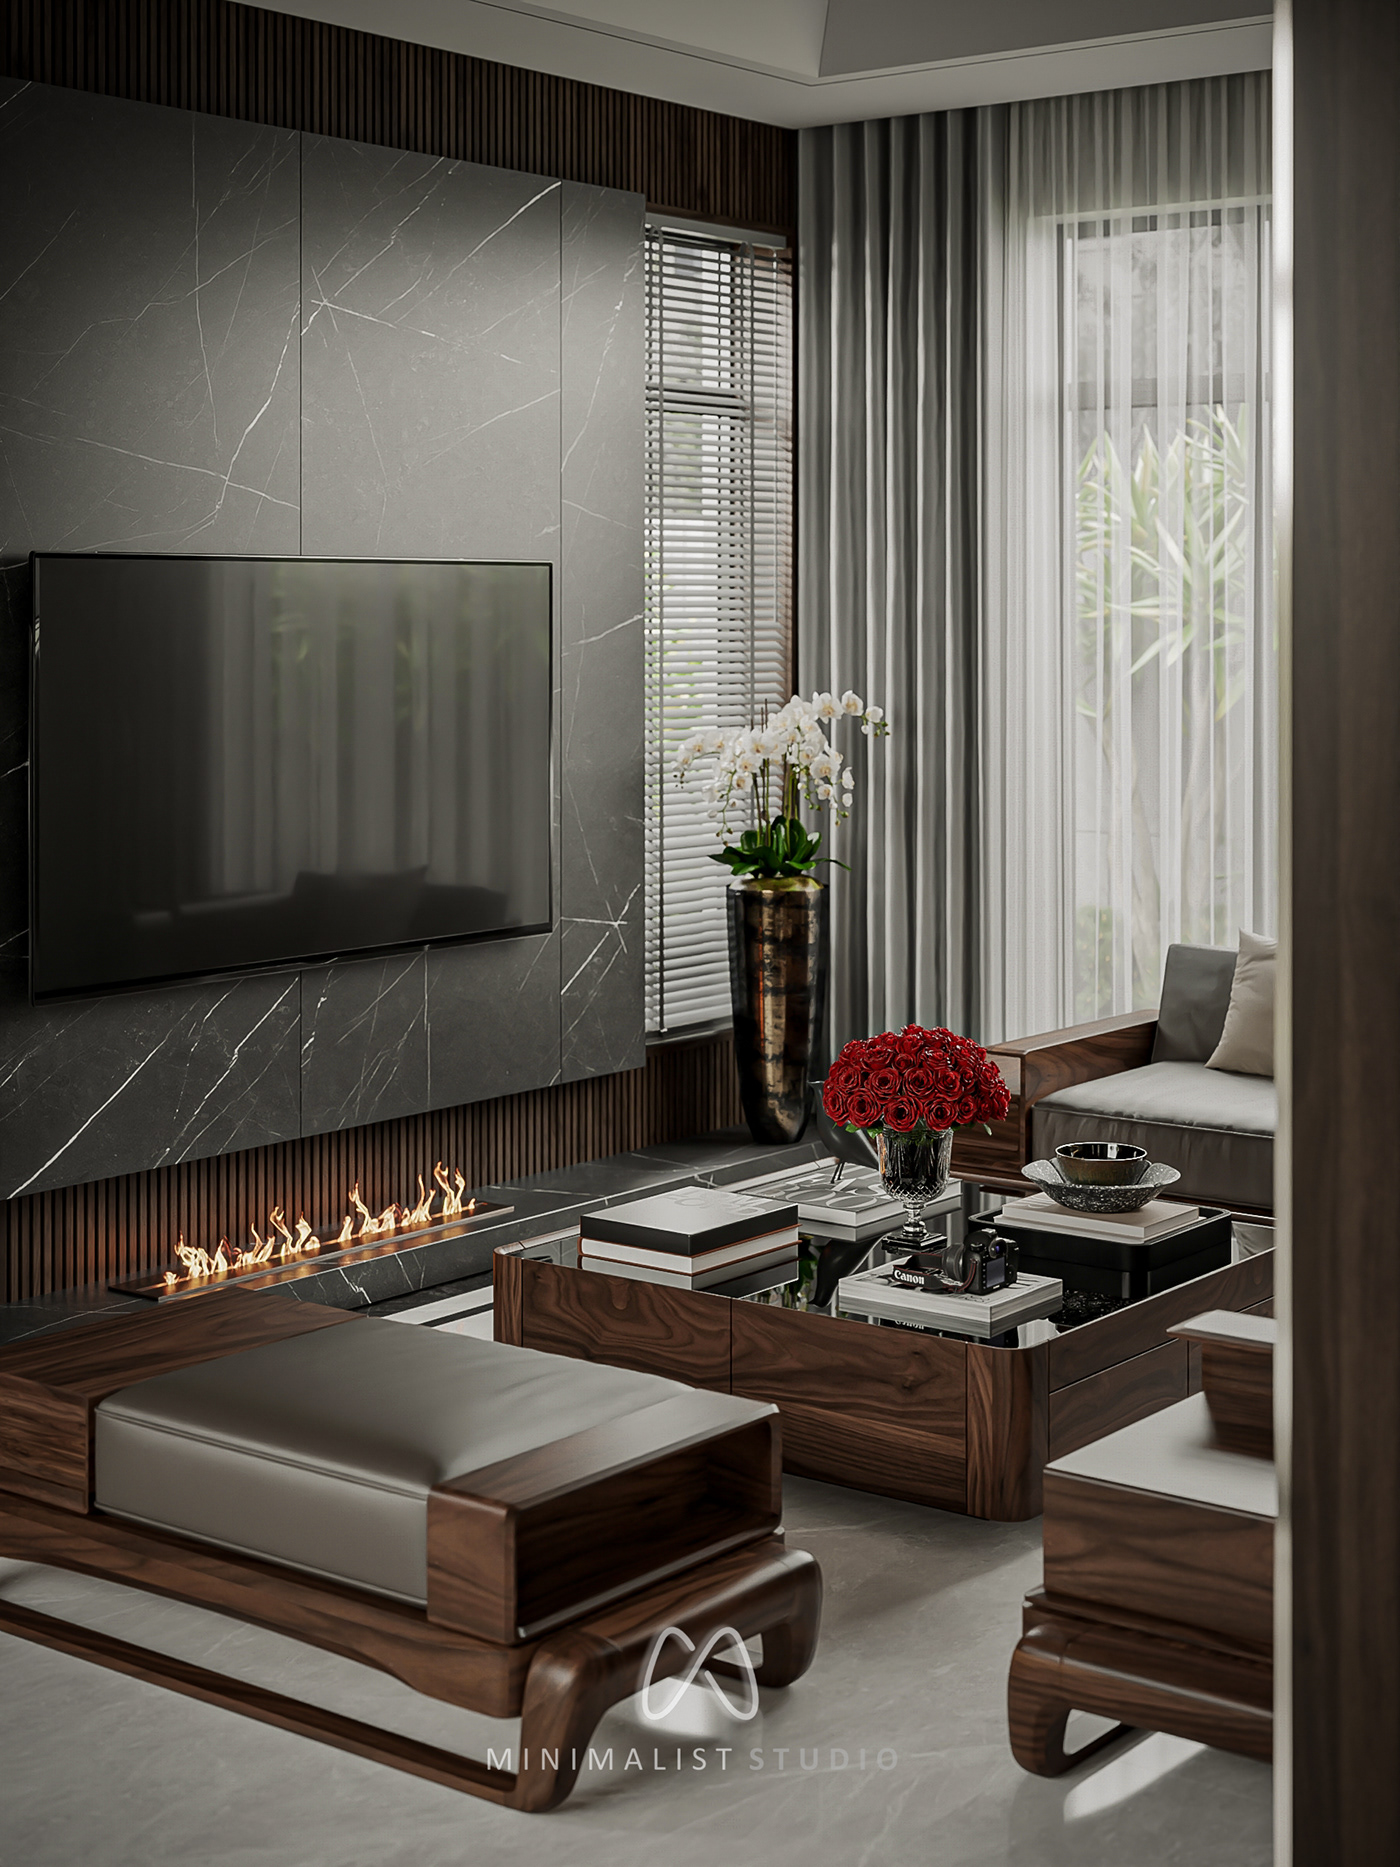 architecture visualization minimalist studio living room kitchen bedroom 3ds max Render